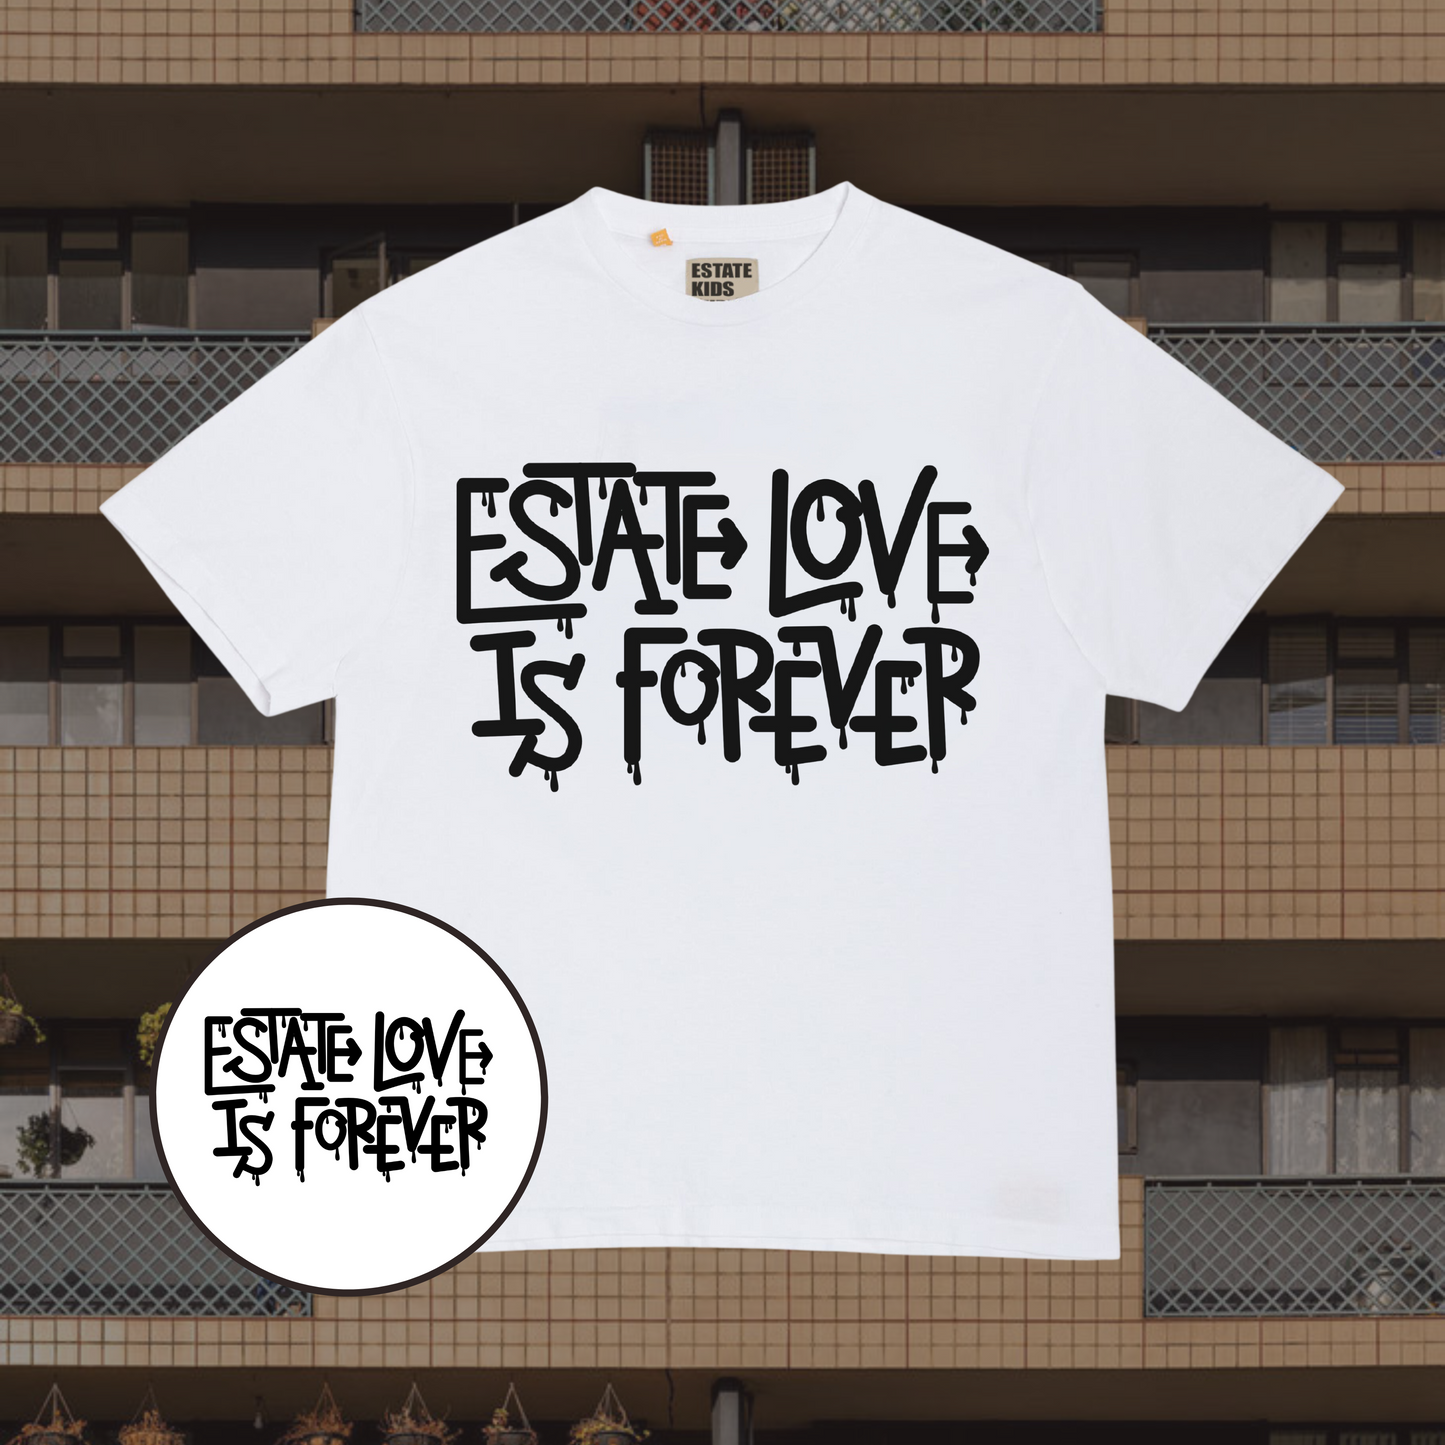 Estate Kids Supply - Estate Love T-Shirt